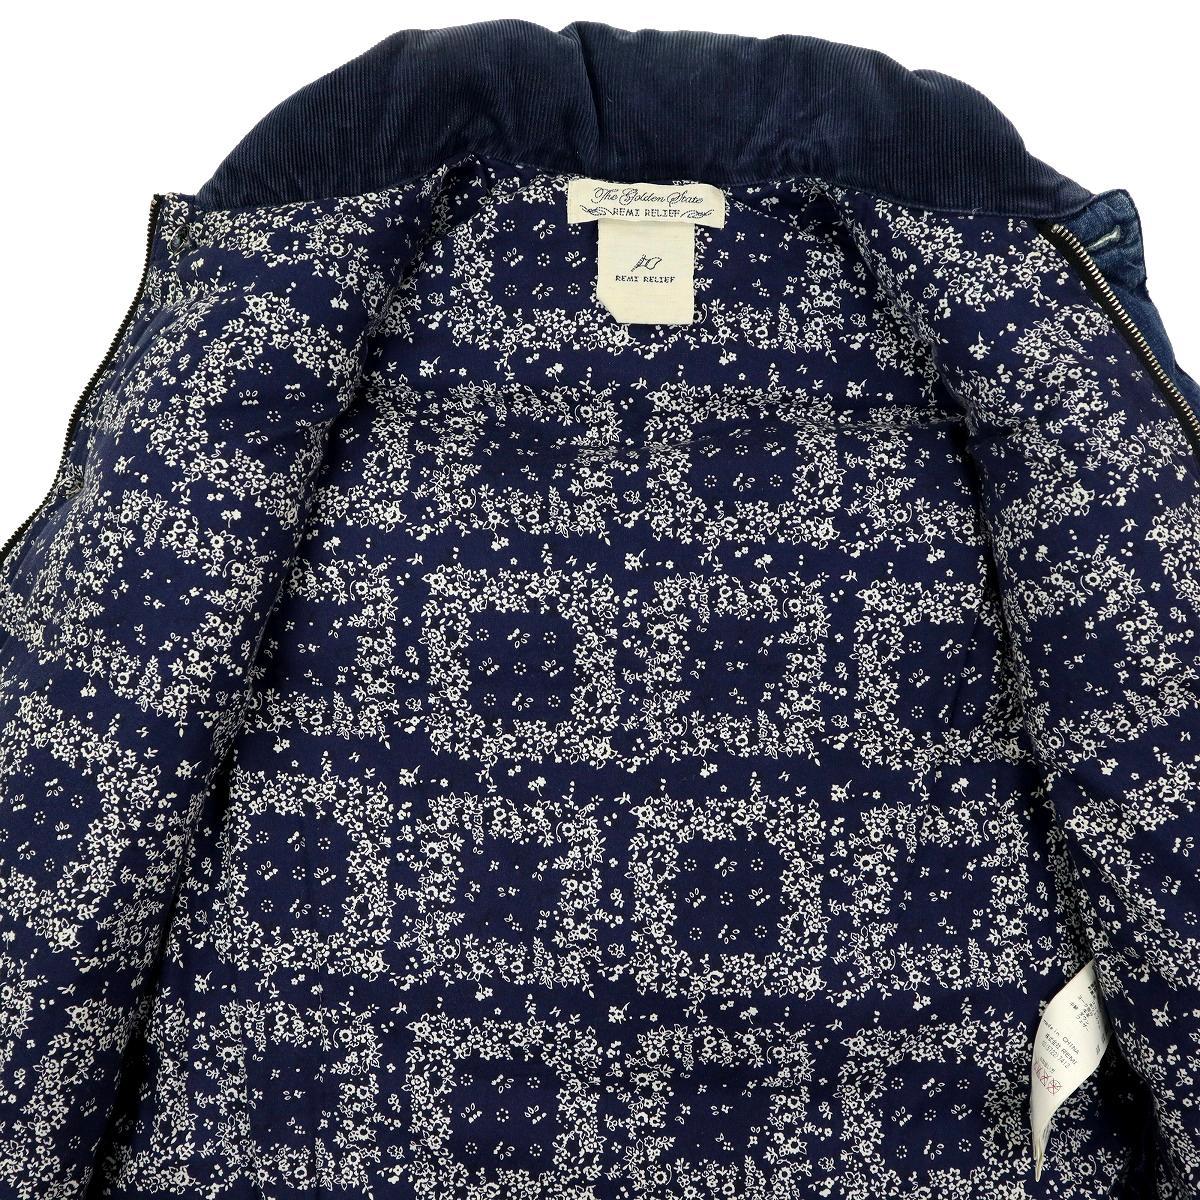 [B1891][ regular price 63,800 jpy ]REMI RELIEFremi relief down vest Denim jacket peiz Lee pattern patchwork indigo Conti .S